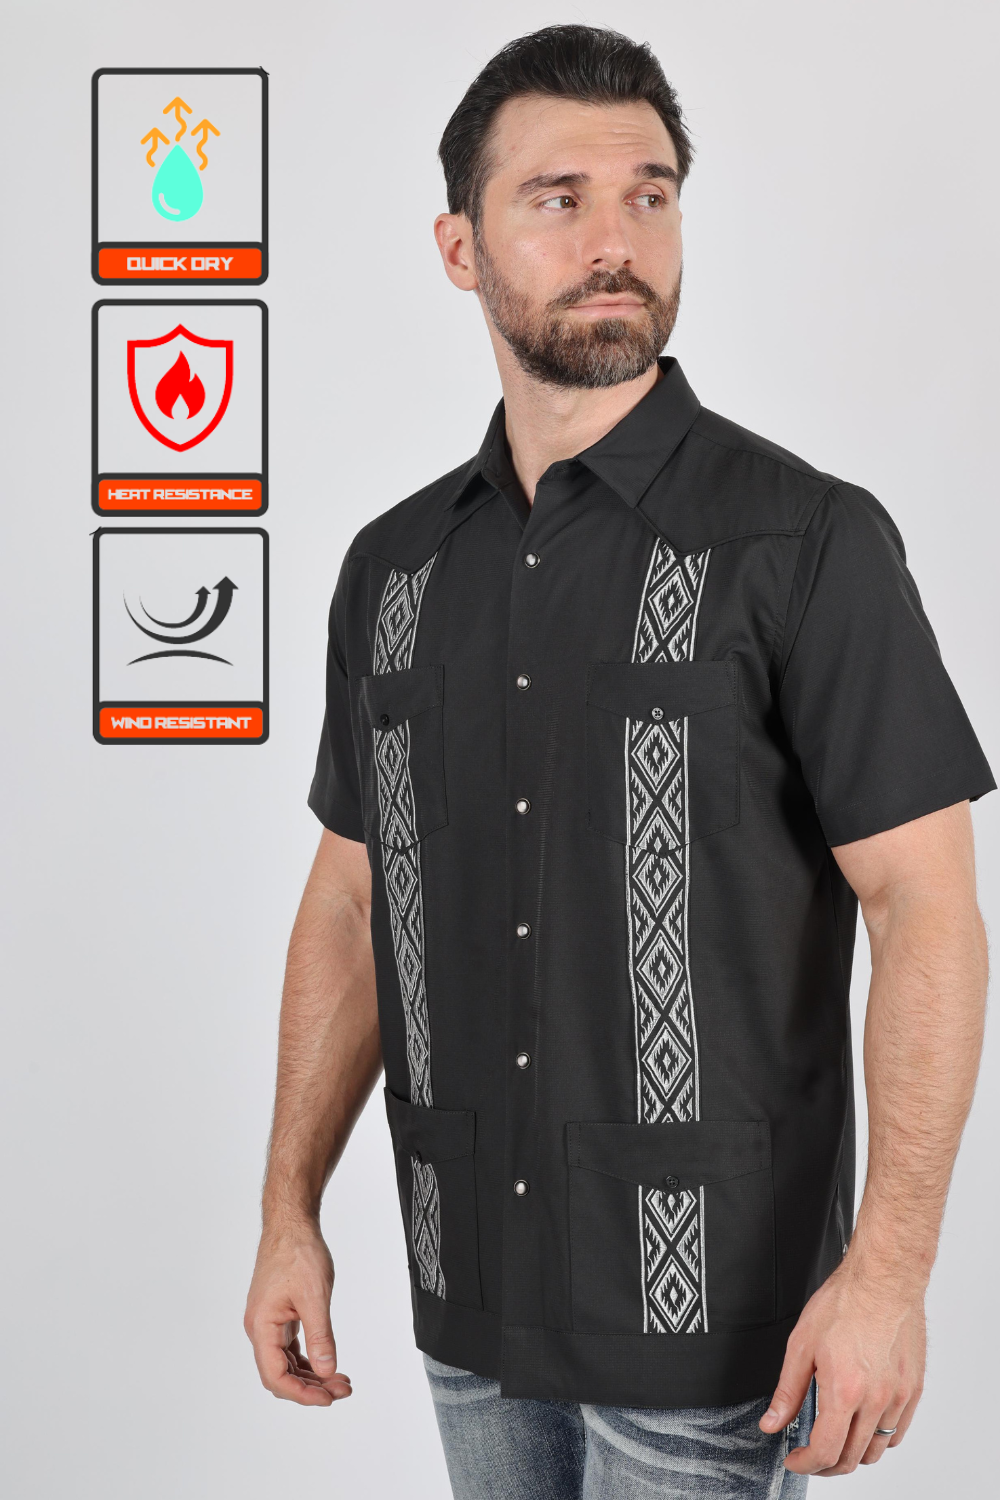 Men's Modern Charcoal GUAYABERA Shirt